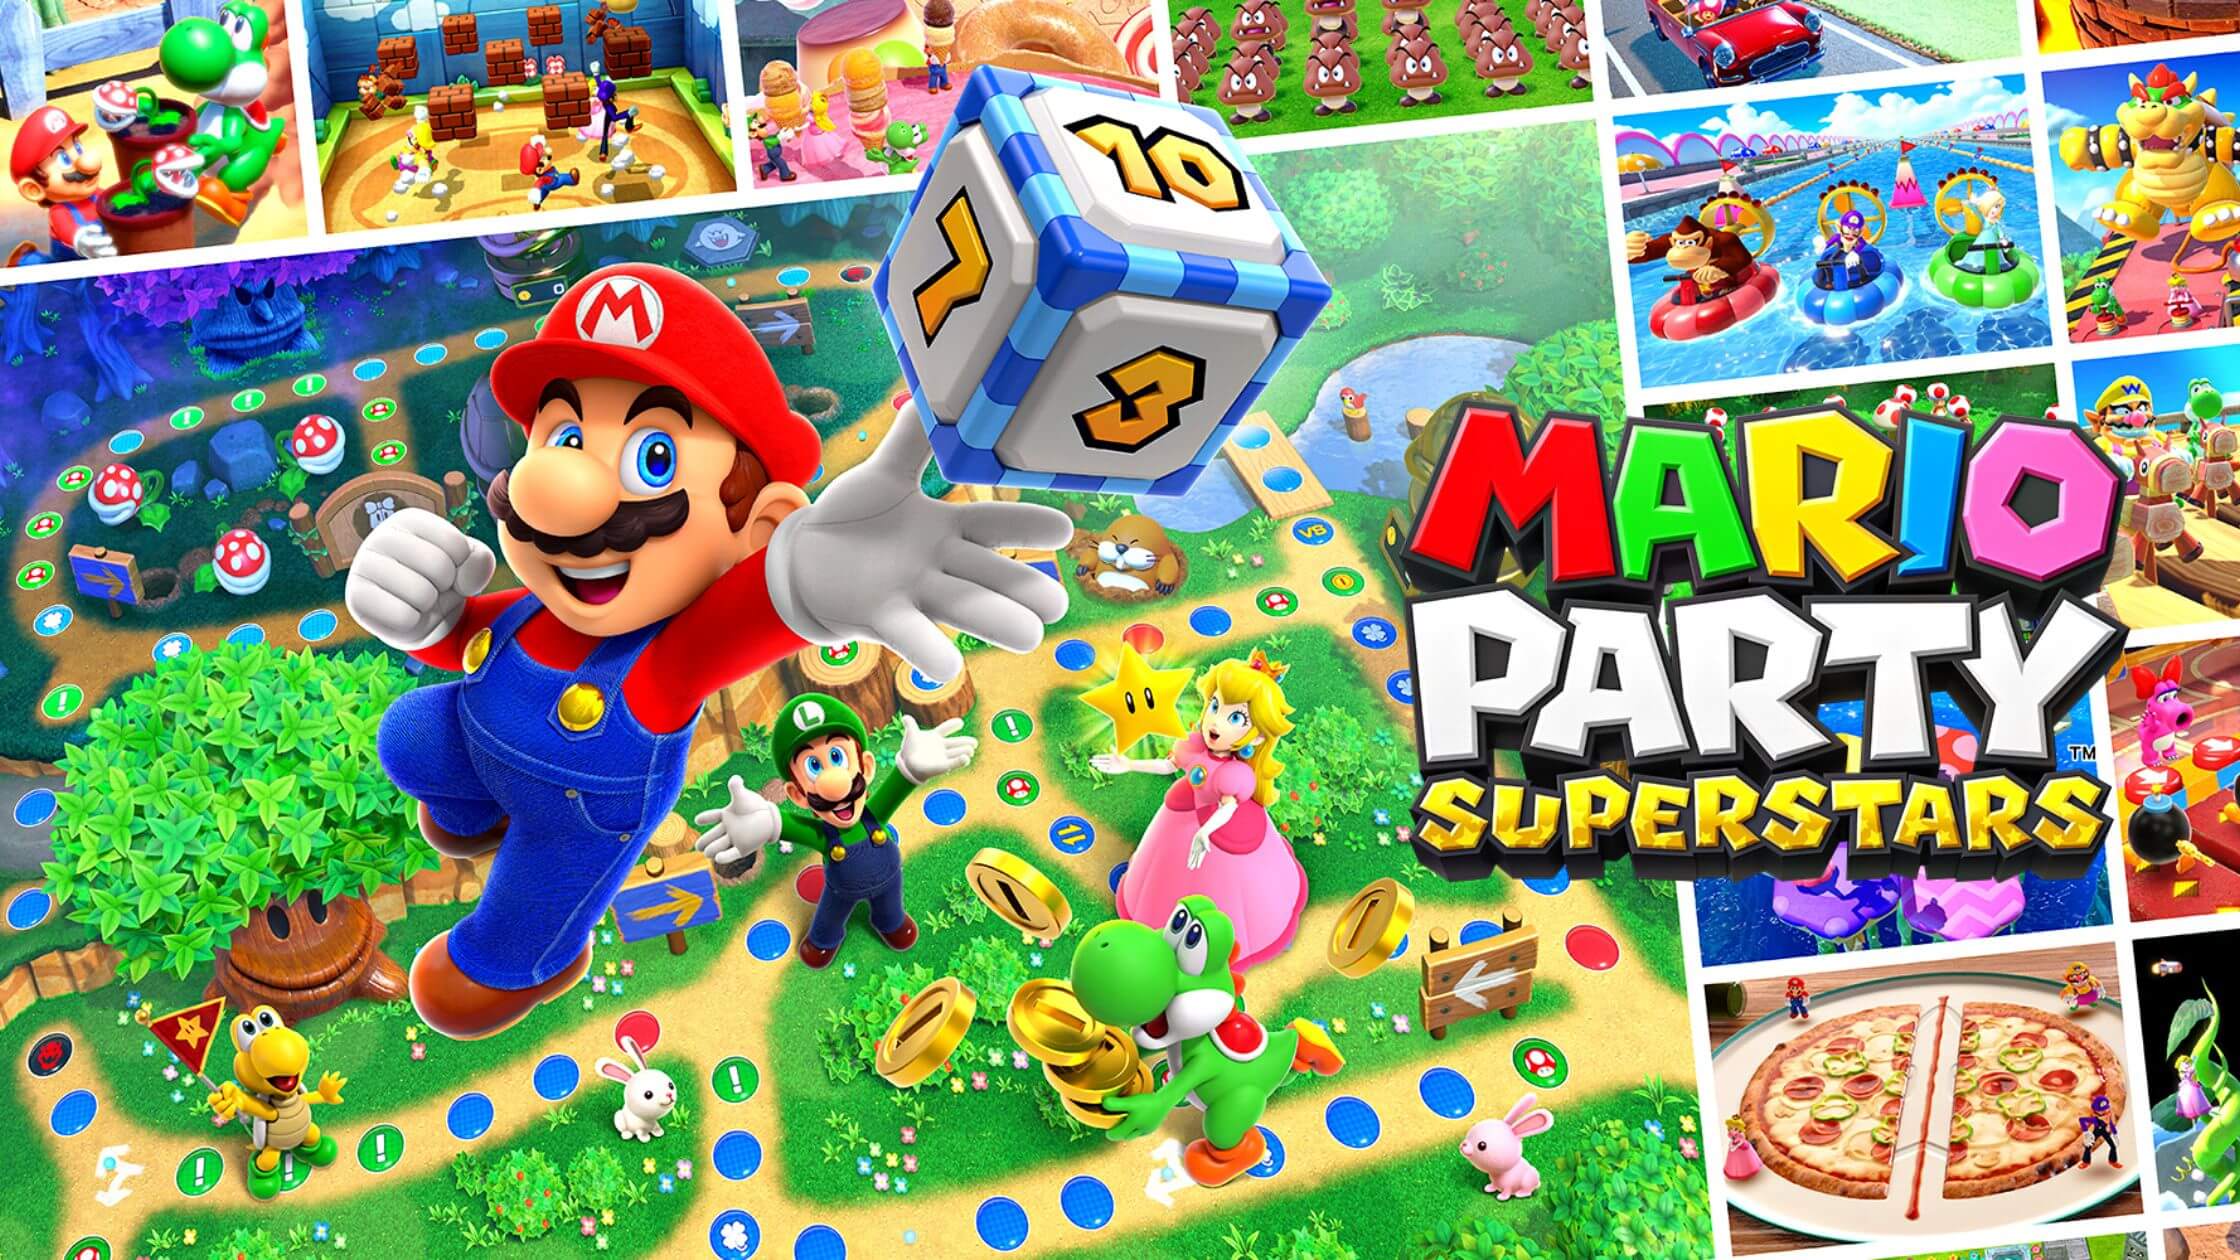 3. Mario Party Superstars